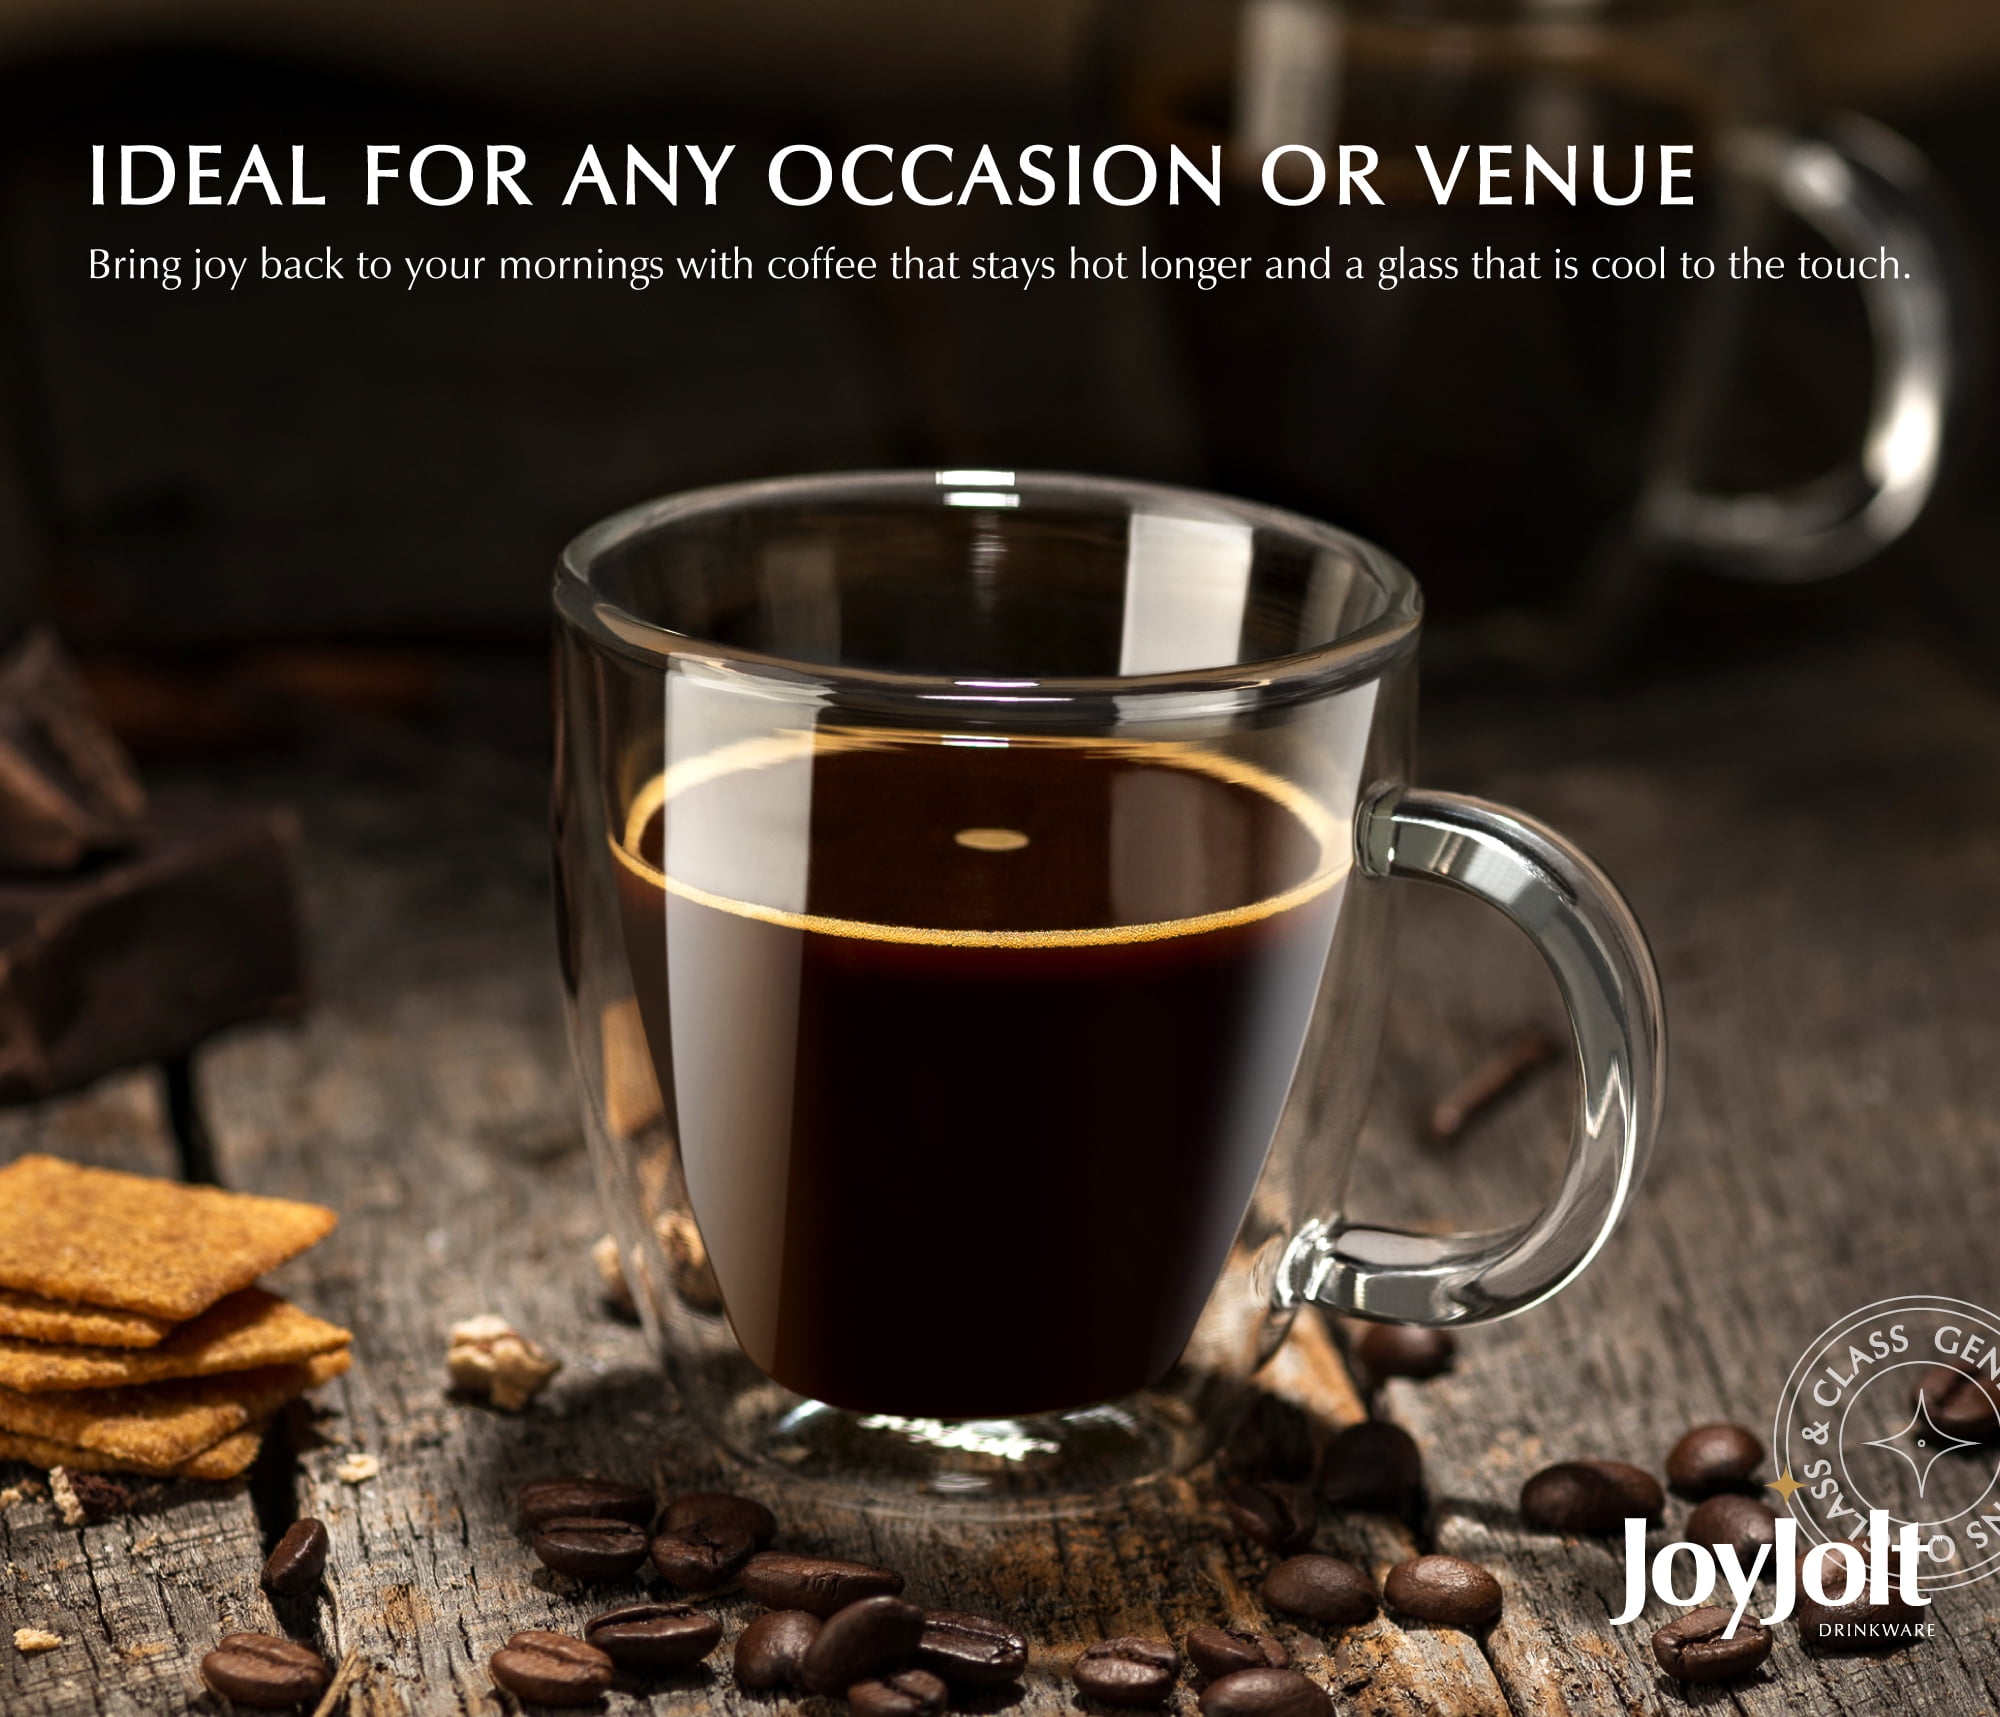 JoyJolt Savor Double Wall Insulated Glasses - Coffee Mugs (Set  of 2) - 13.5-Ounces: Irish Coffee Glasses